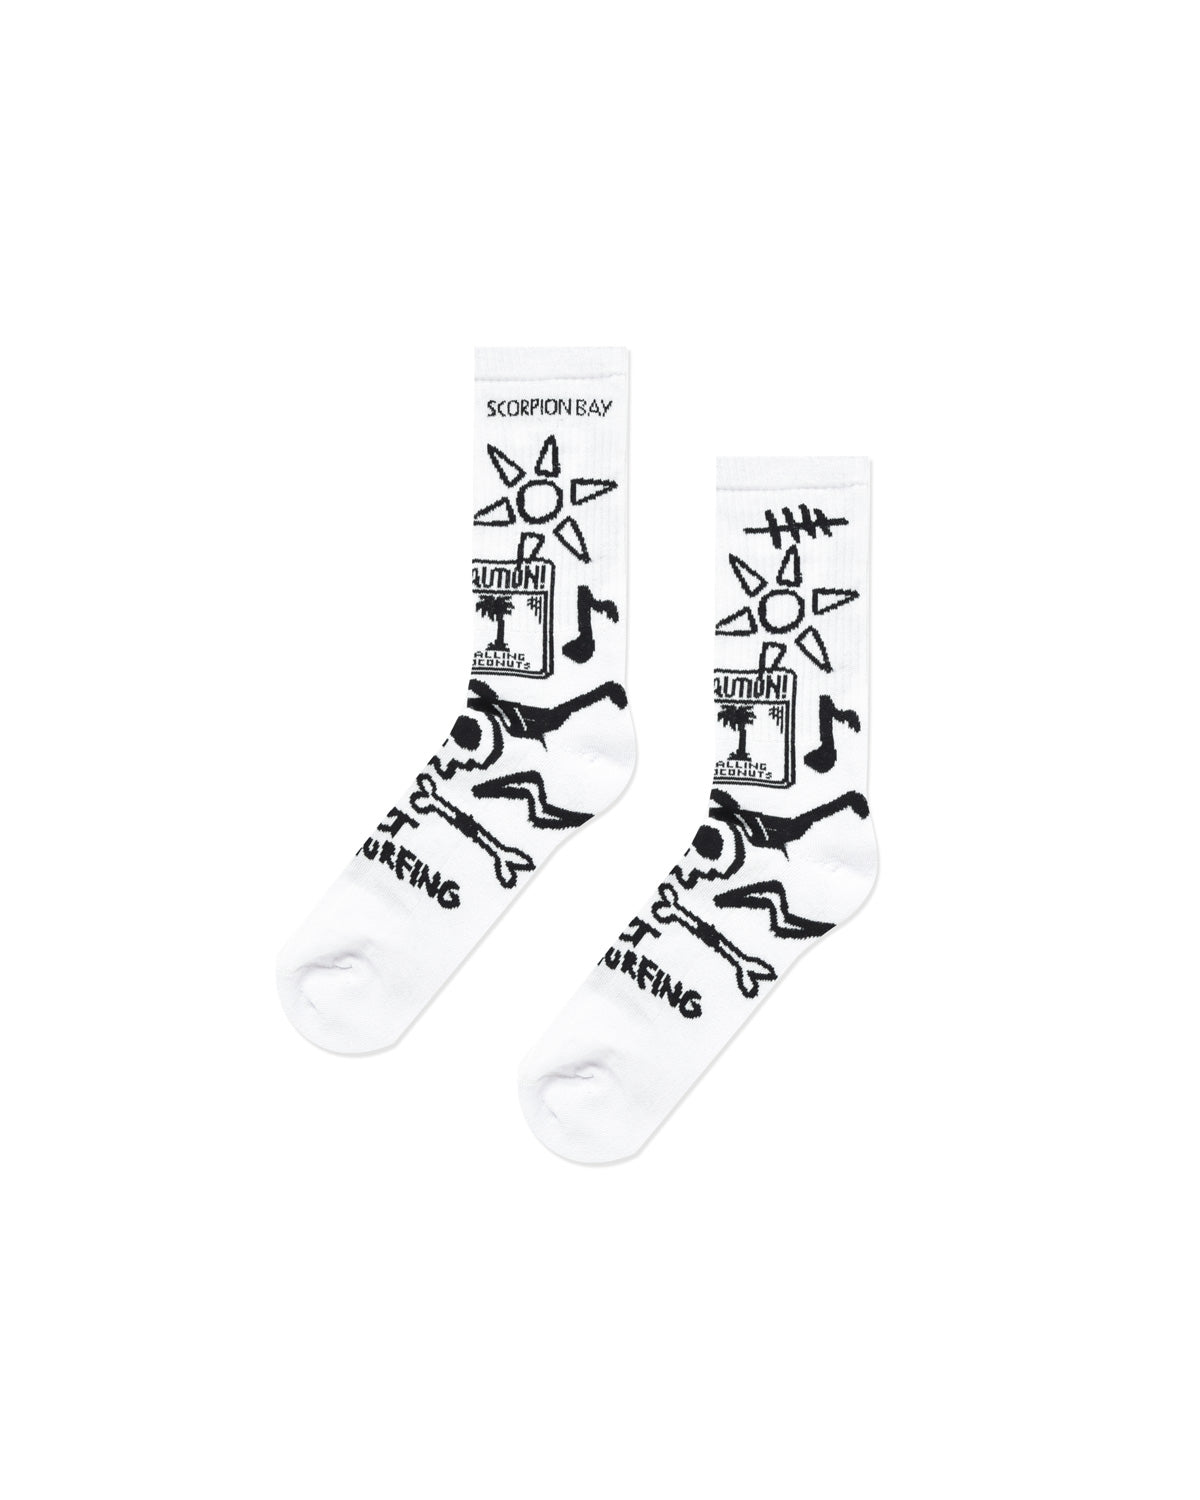 Scorpion Bay Perfect Day White Socks